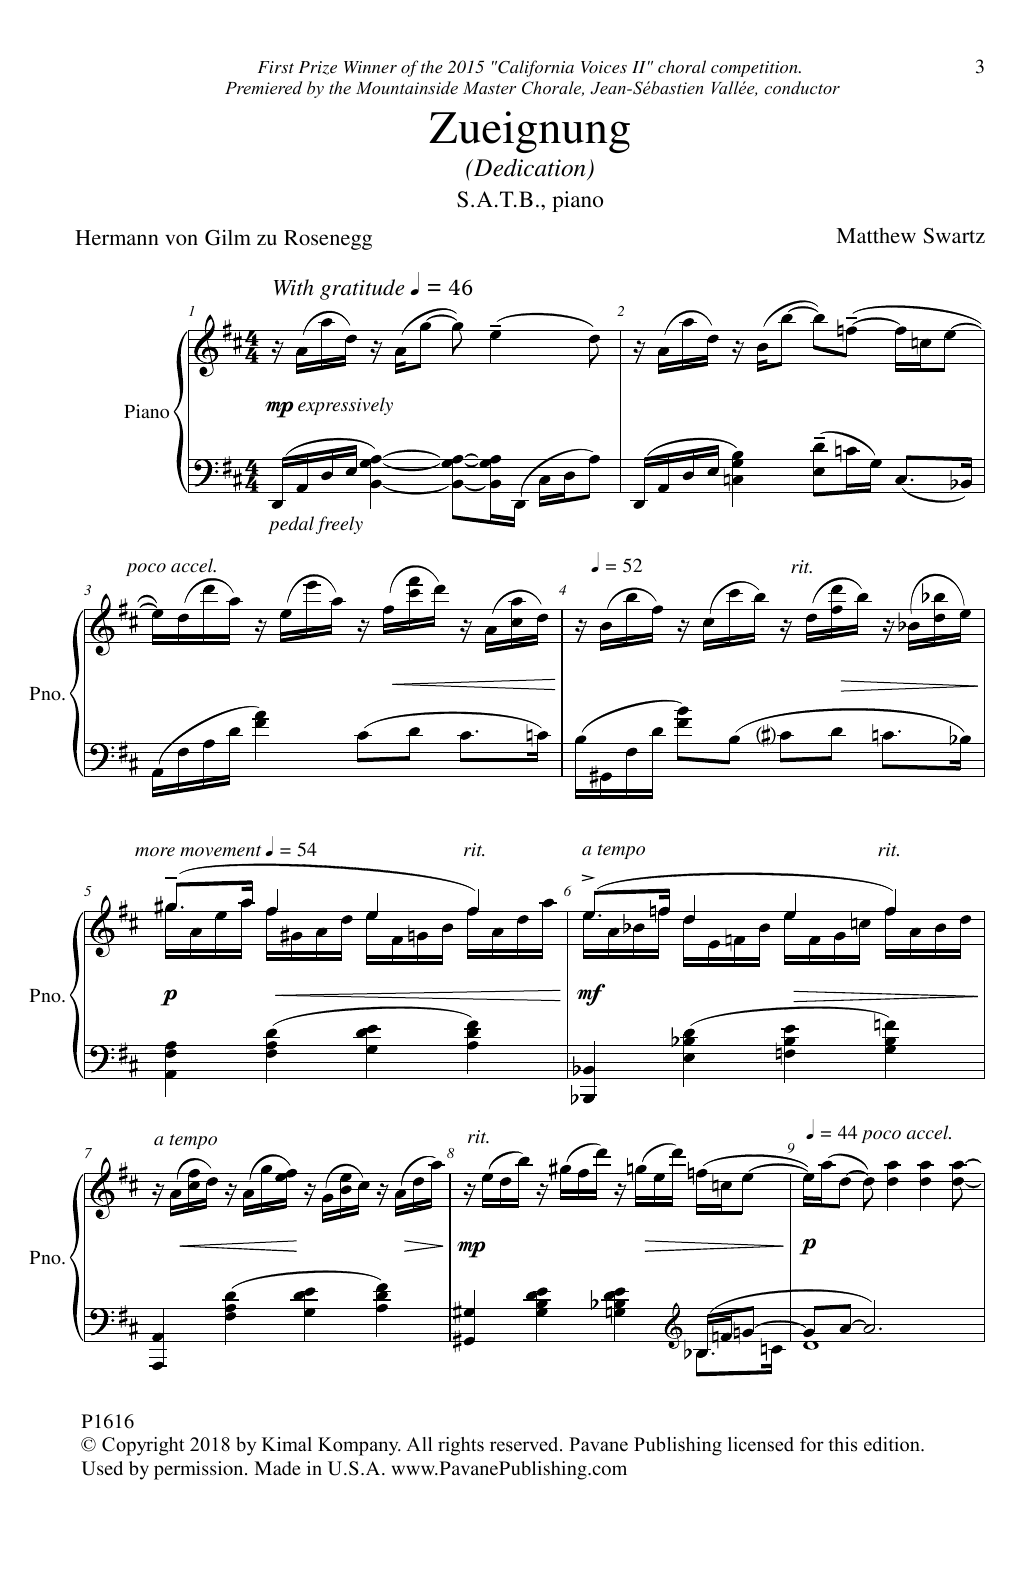 Matthew Swartz Zueignung (Dedication) sheet music notes and chords arranged for SATB Choir